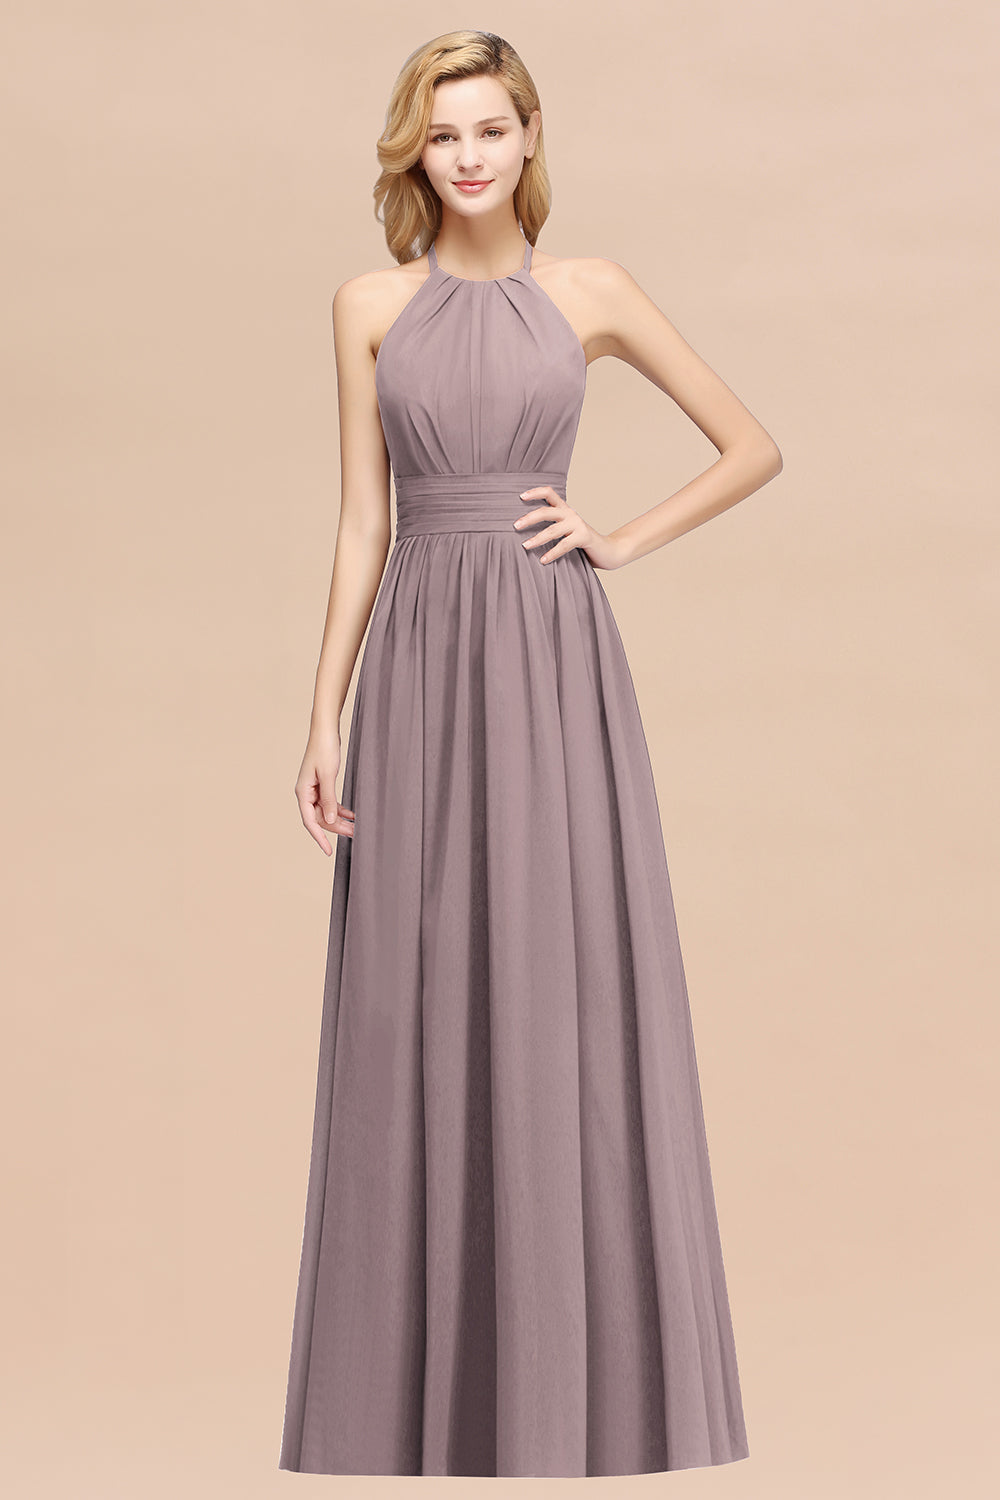 Elegant High-Neck Halter Long Affordable Bridesmaid Dresses with Ruffles-27dress